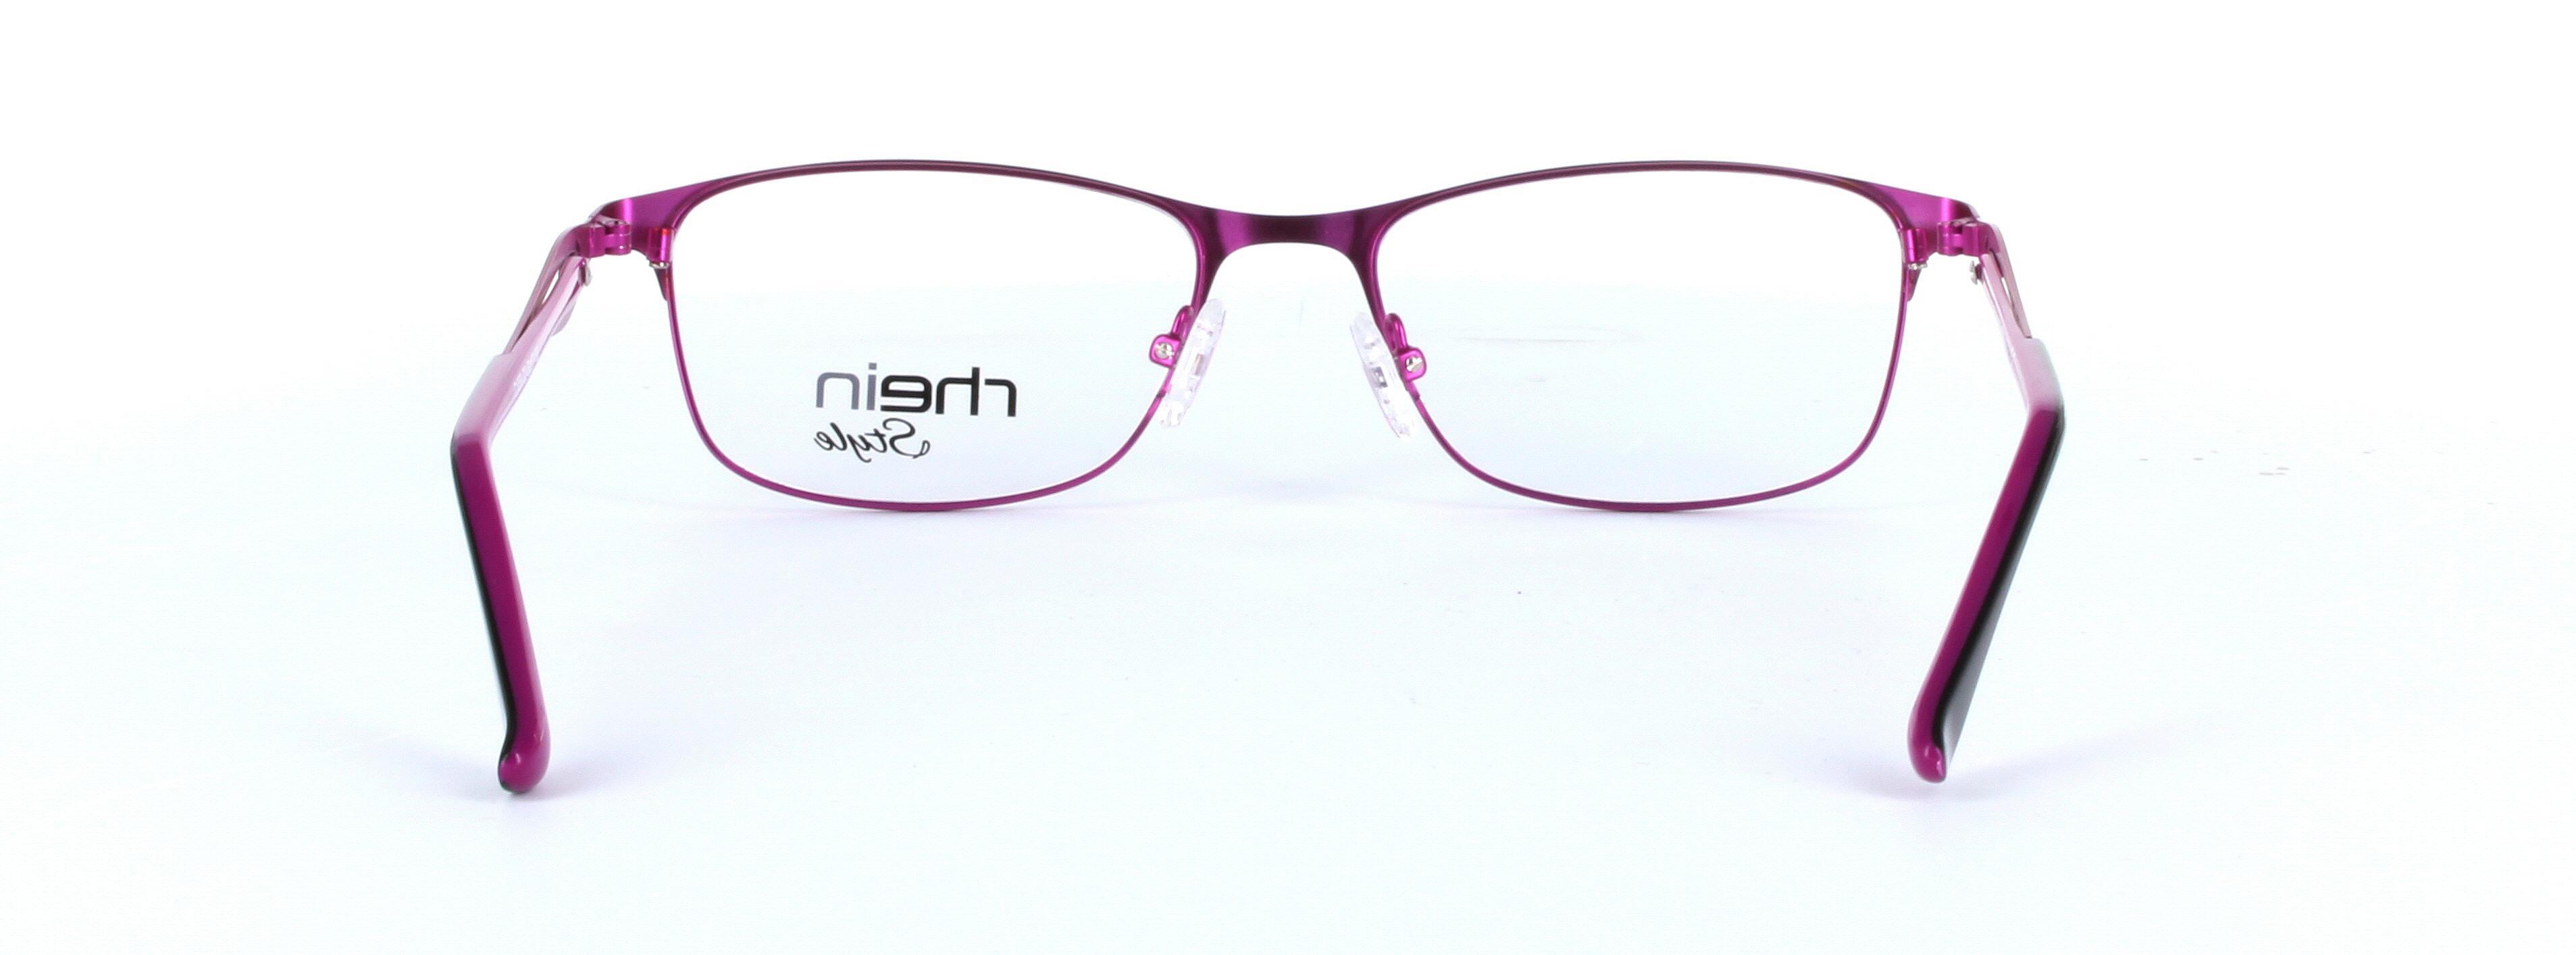 Canberra Black and Pink Full Rim Rectangular Metal Glasses - Image View 3